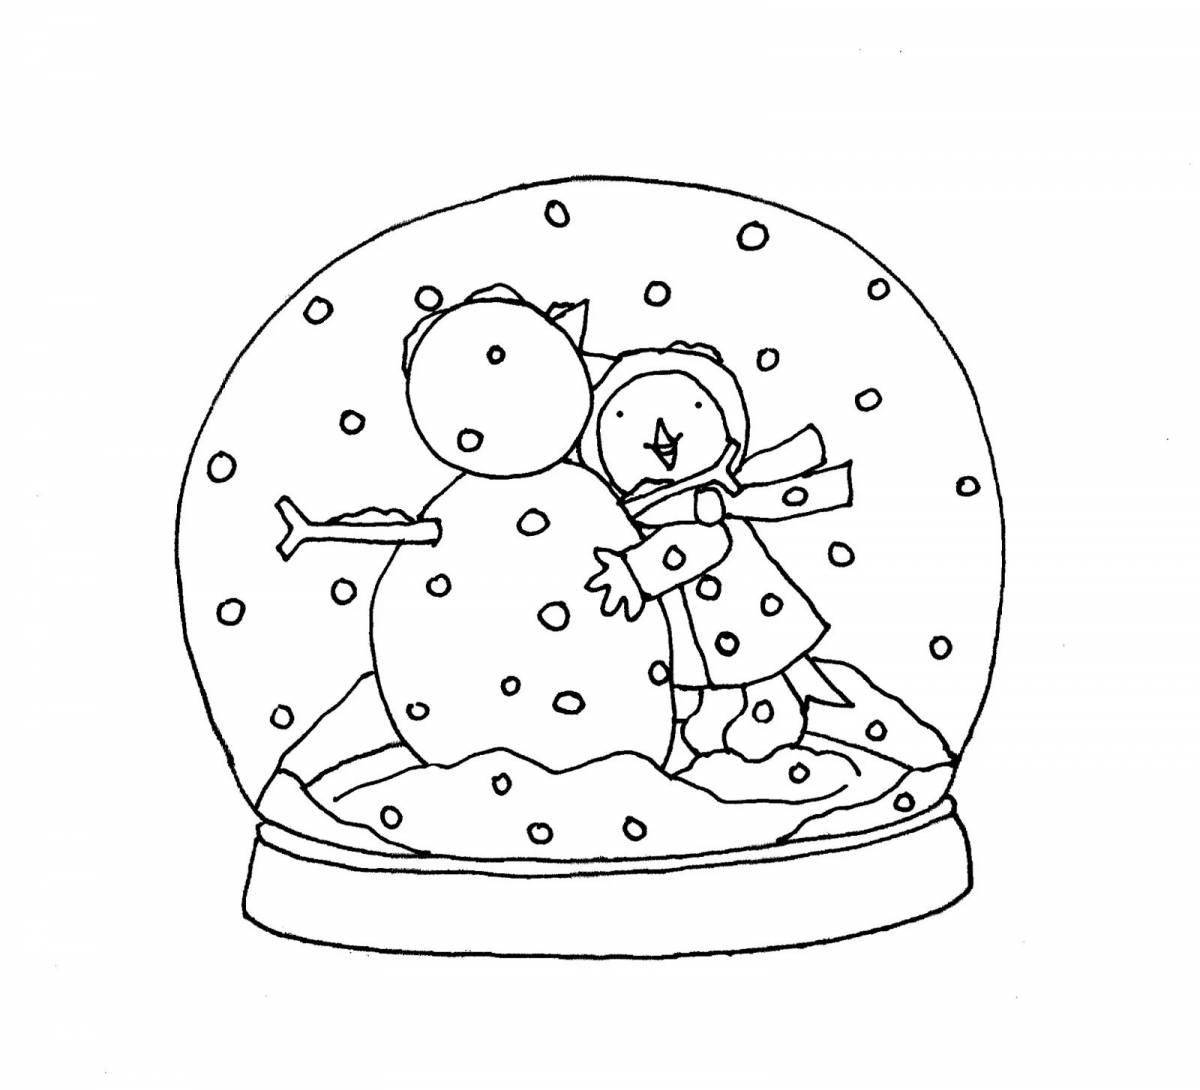 Magic snowball coloring page